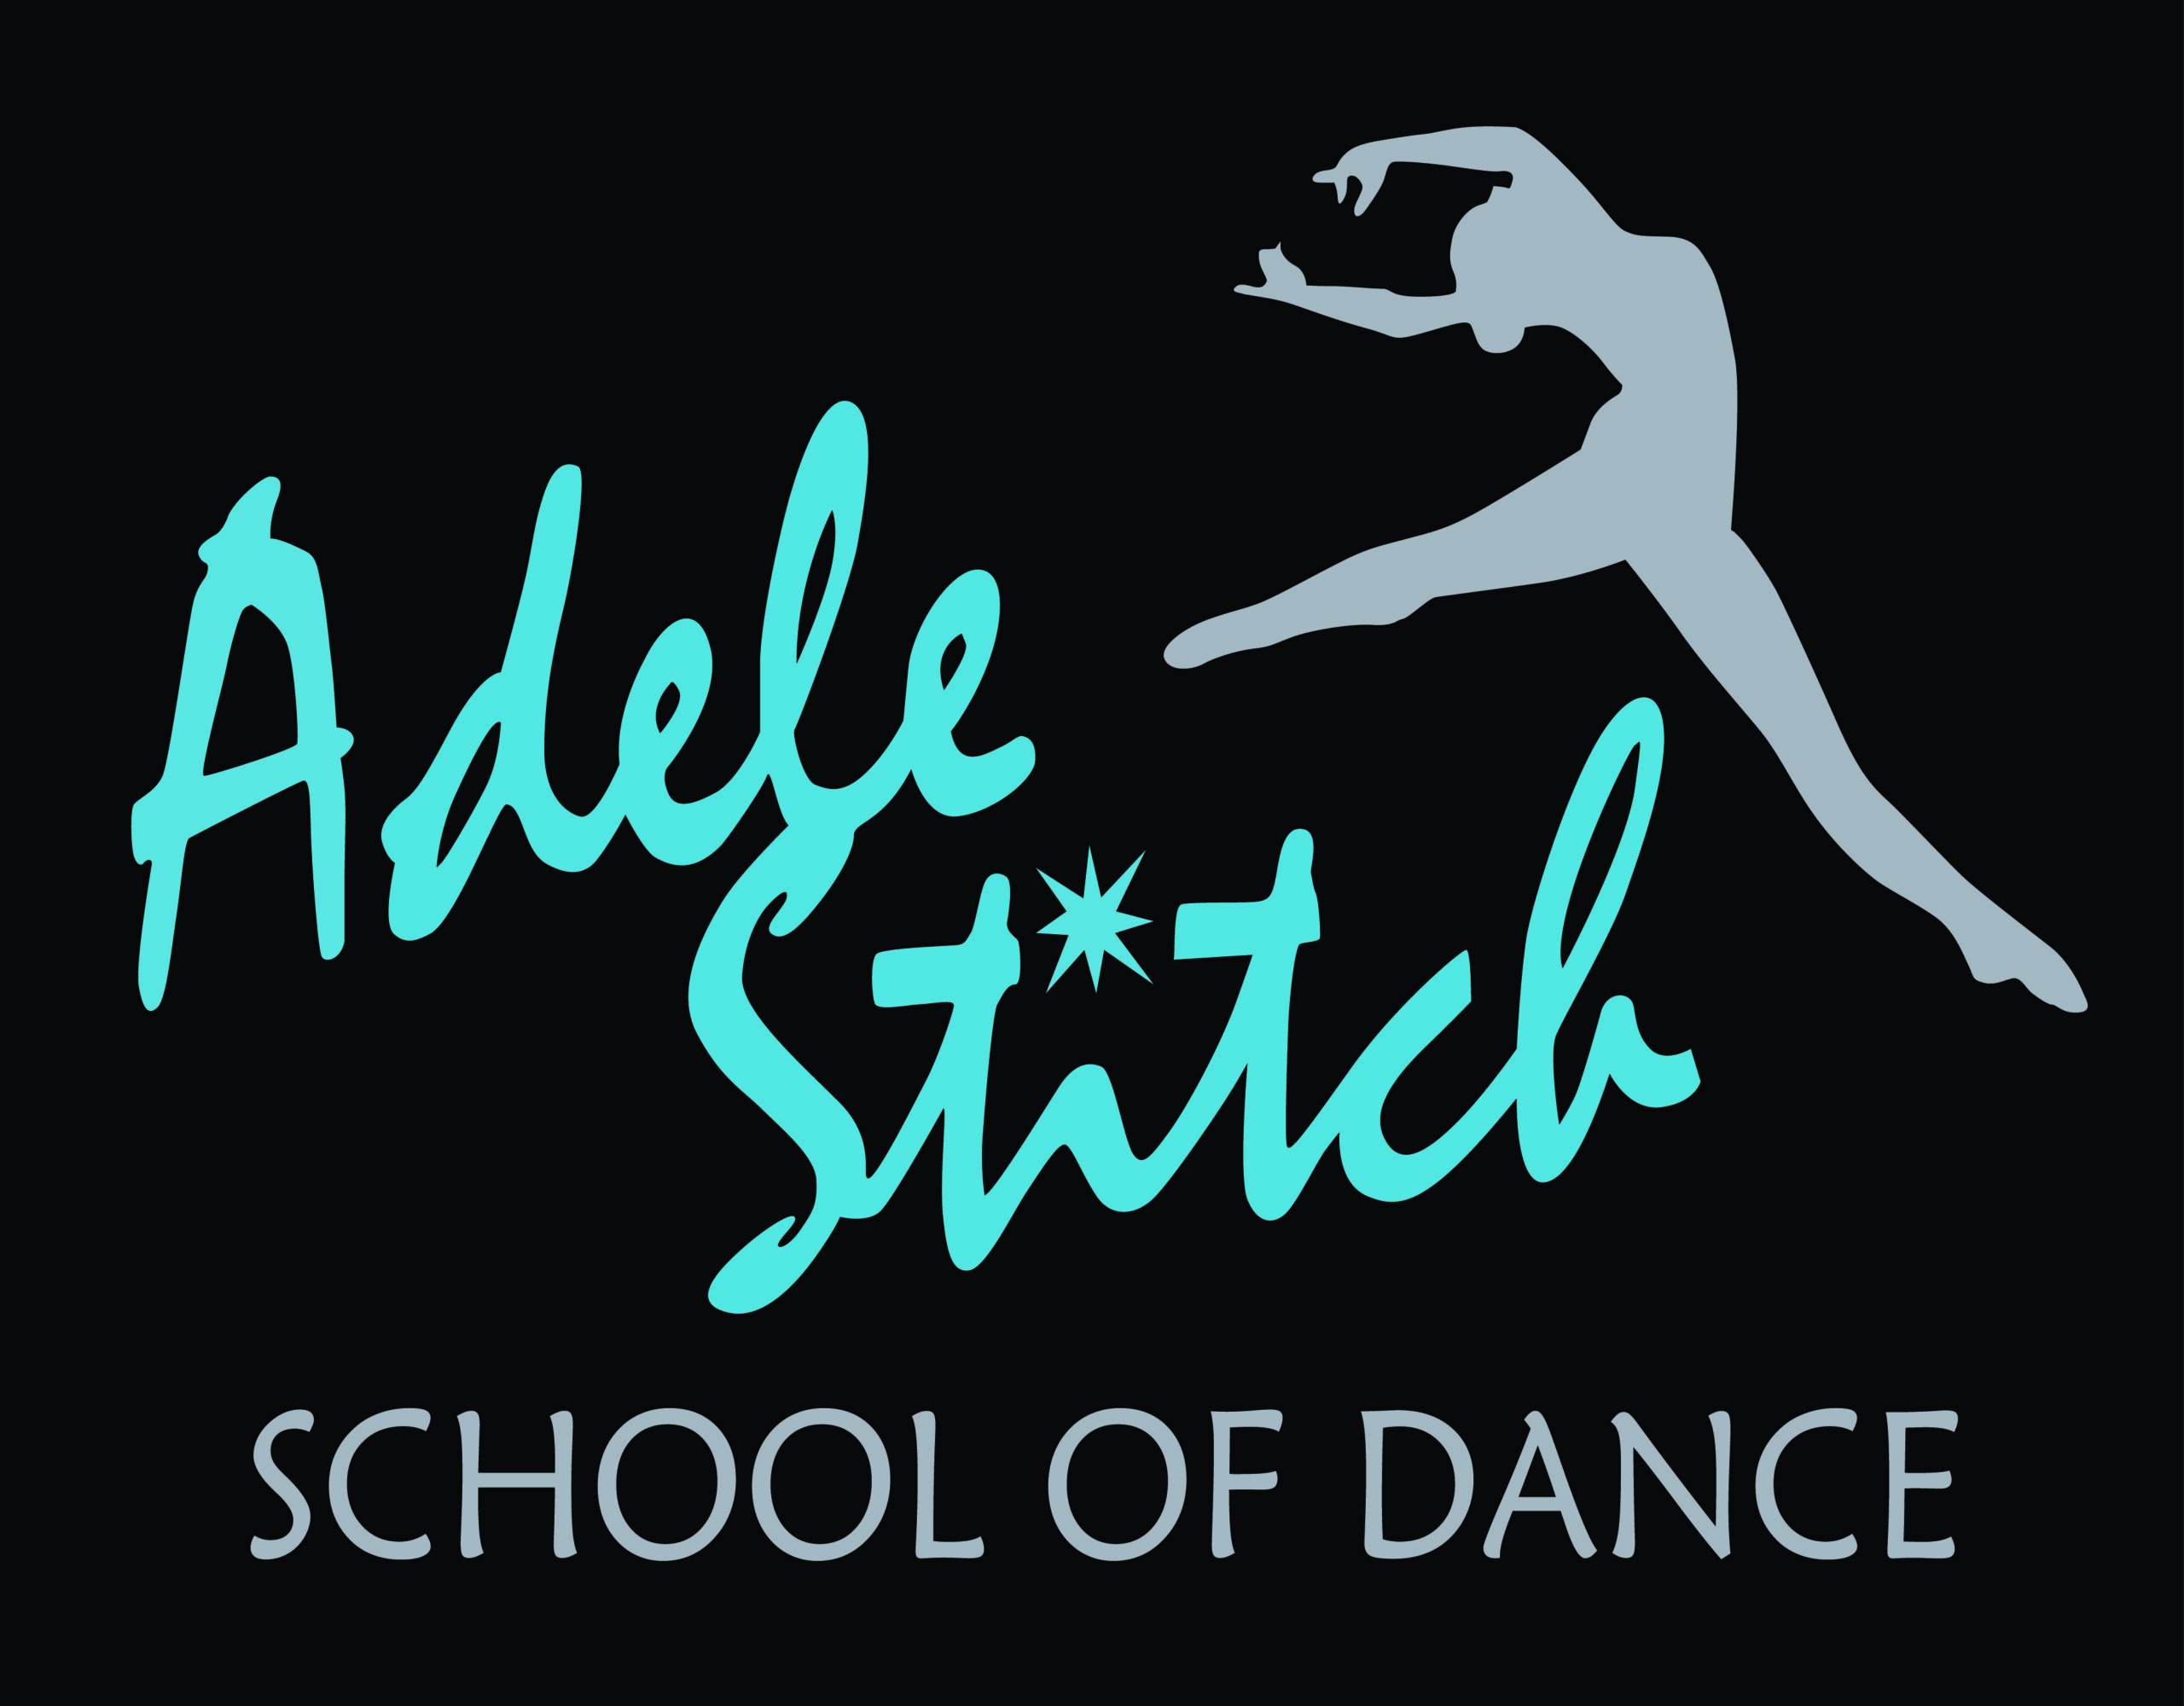 Adele Stitch school of dance logo